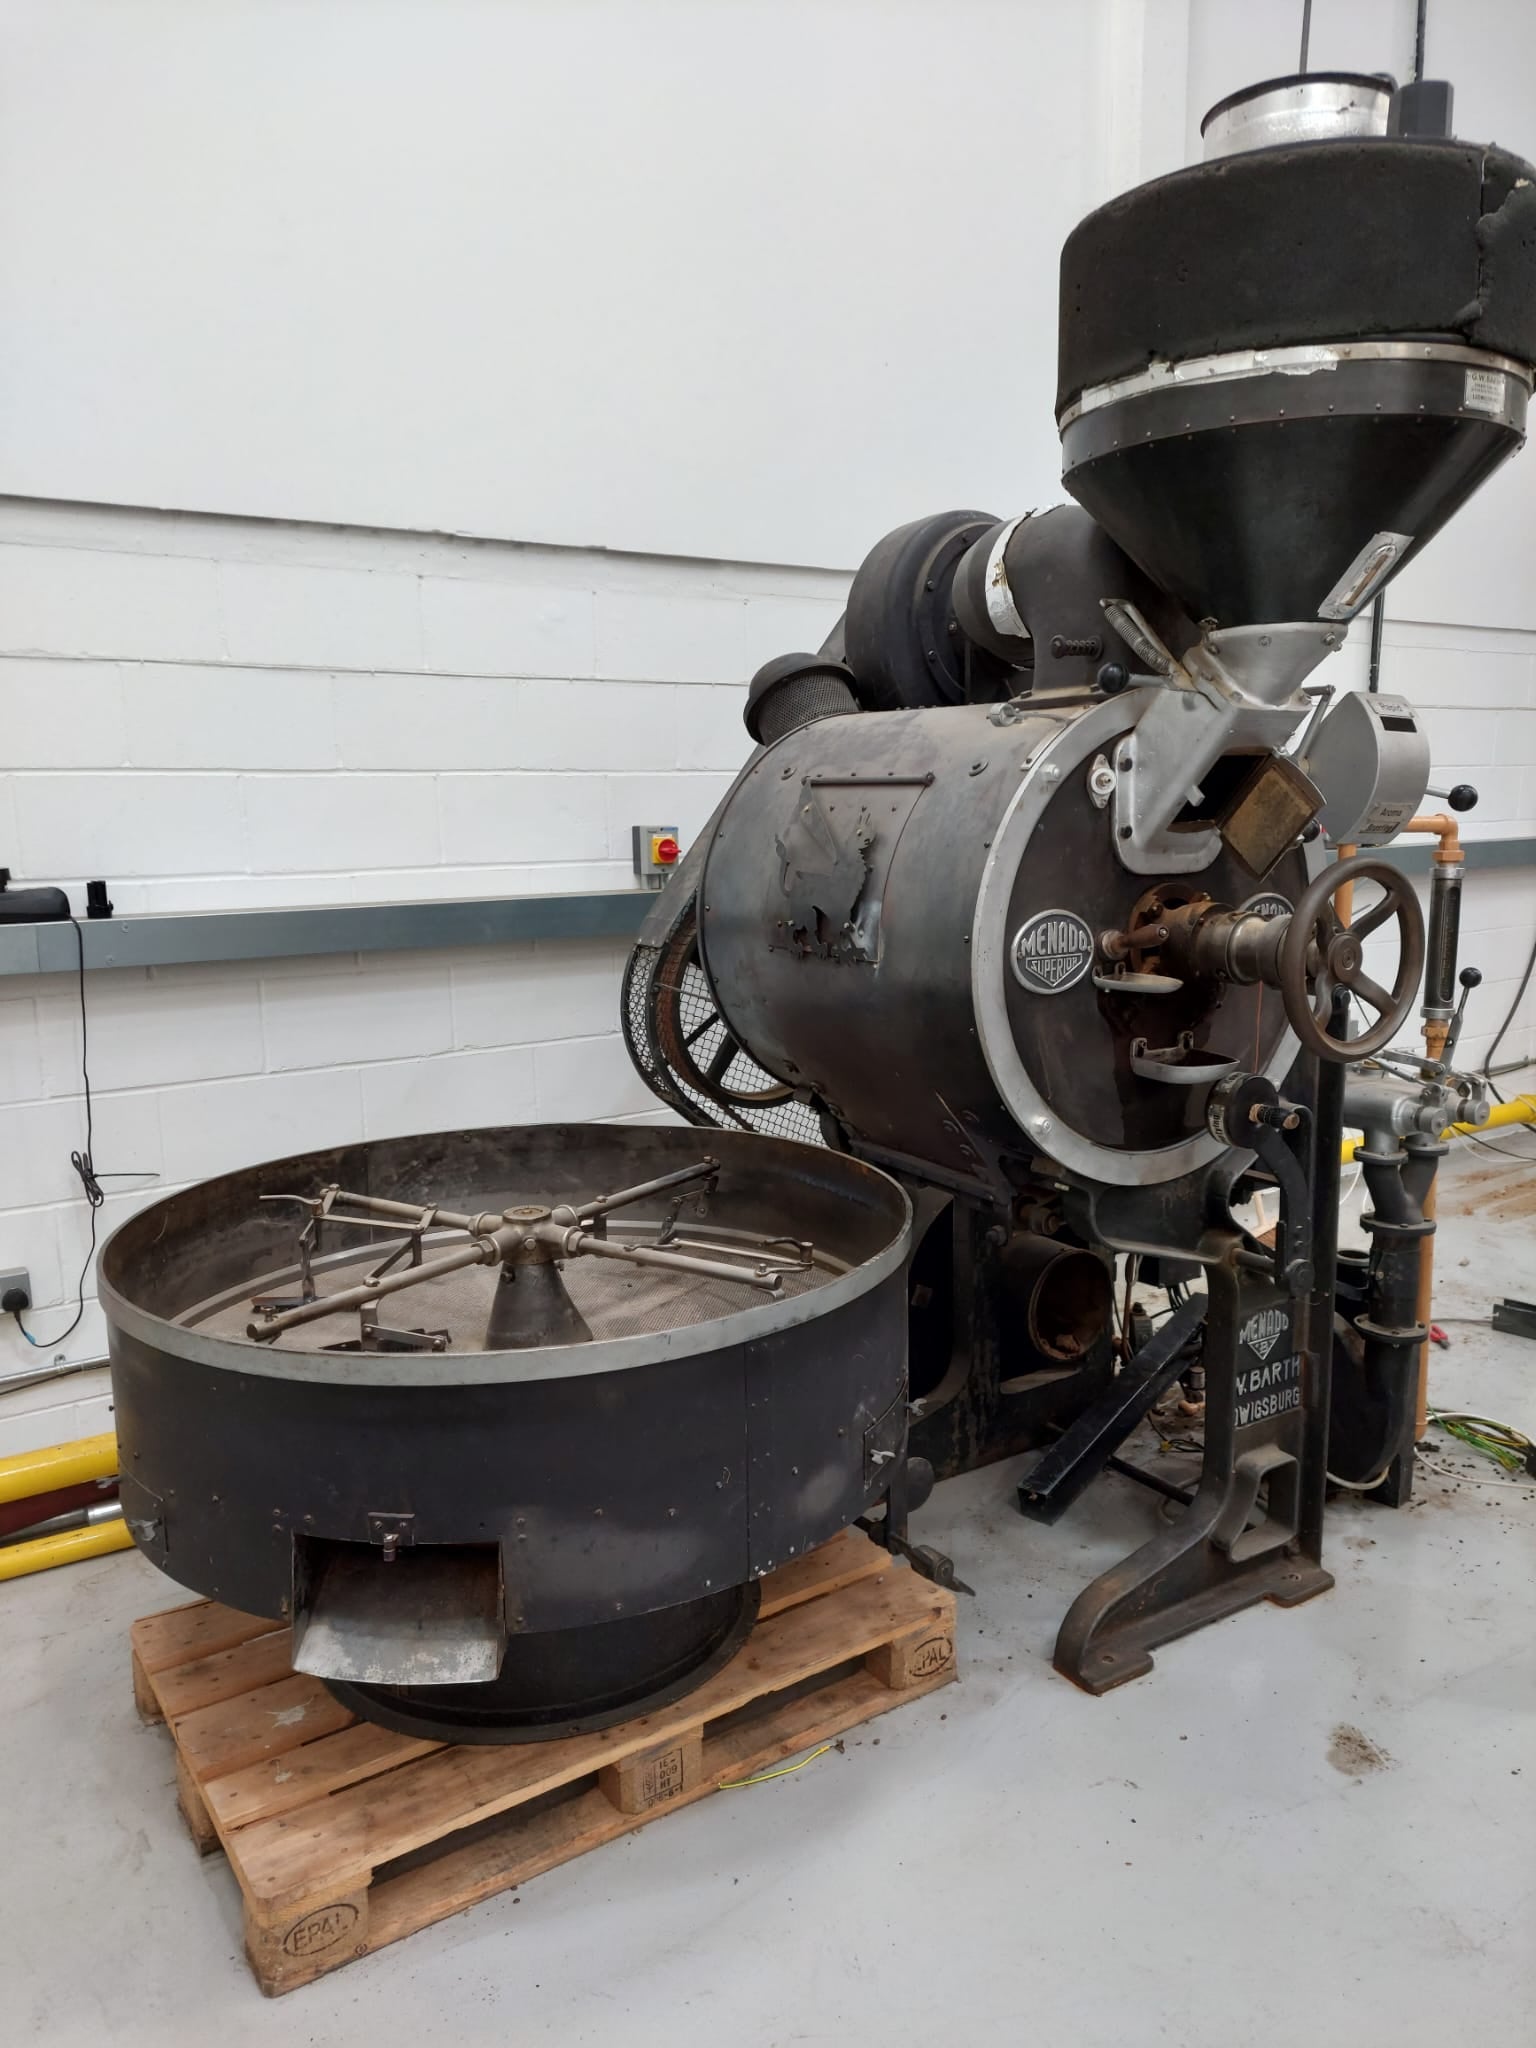 Say hello to our new (to us) 30kg Barth Menado roasting machine